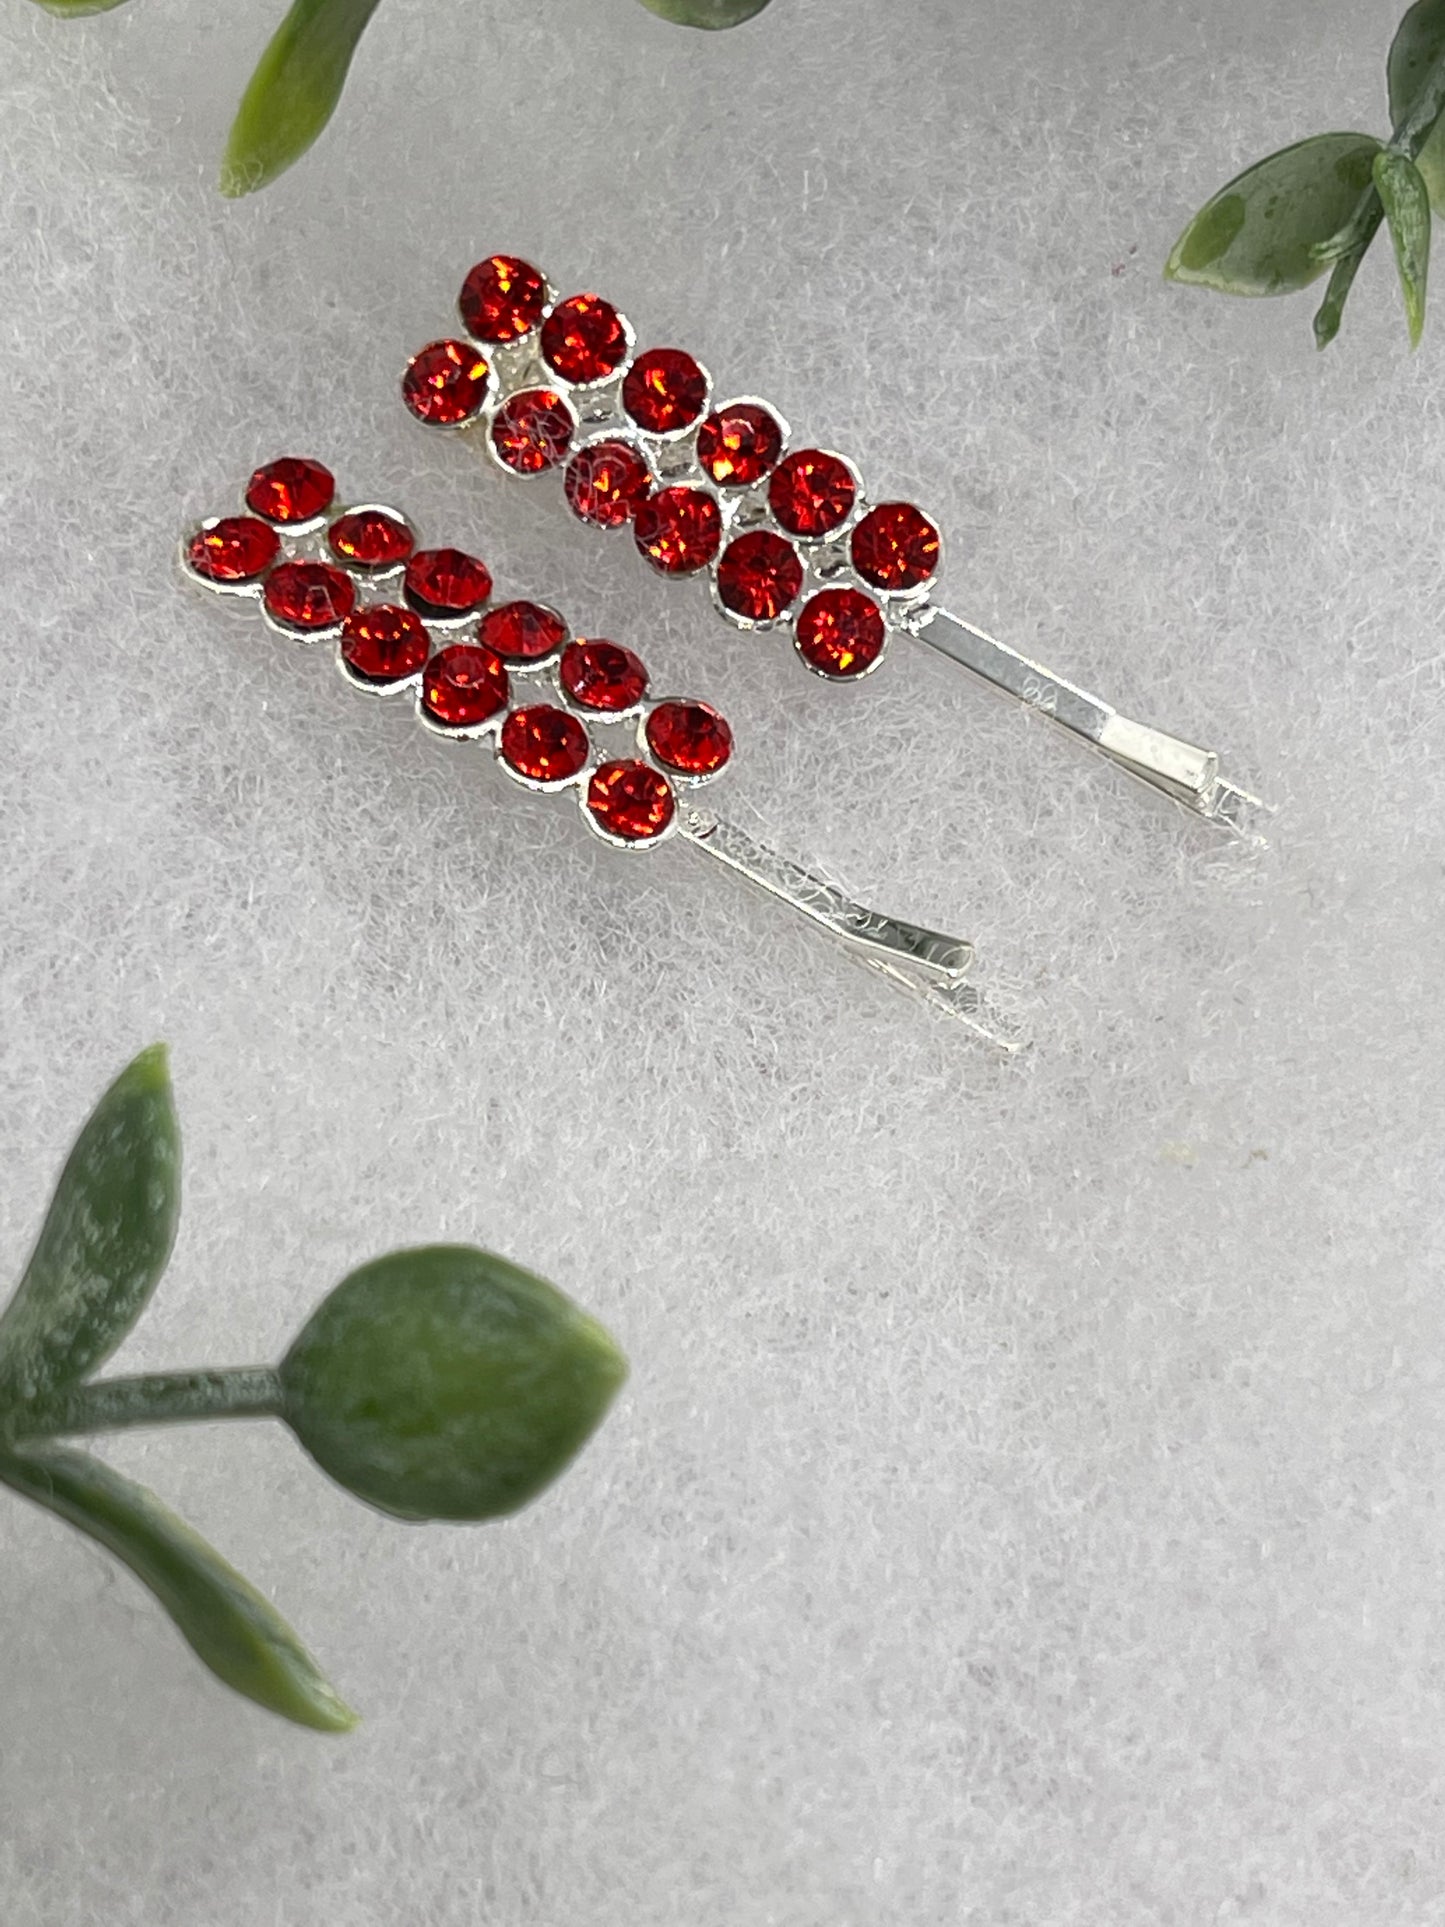 Red Crystal Rhinestone Bobby pin hair pins set approximately 2.0”  silver tone formal hair accessory gift wedding bridal Hair accessory